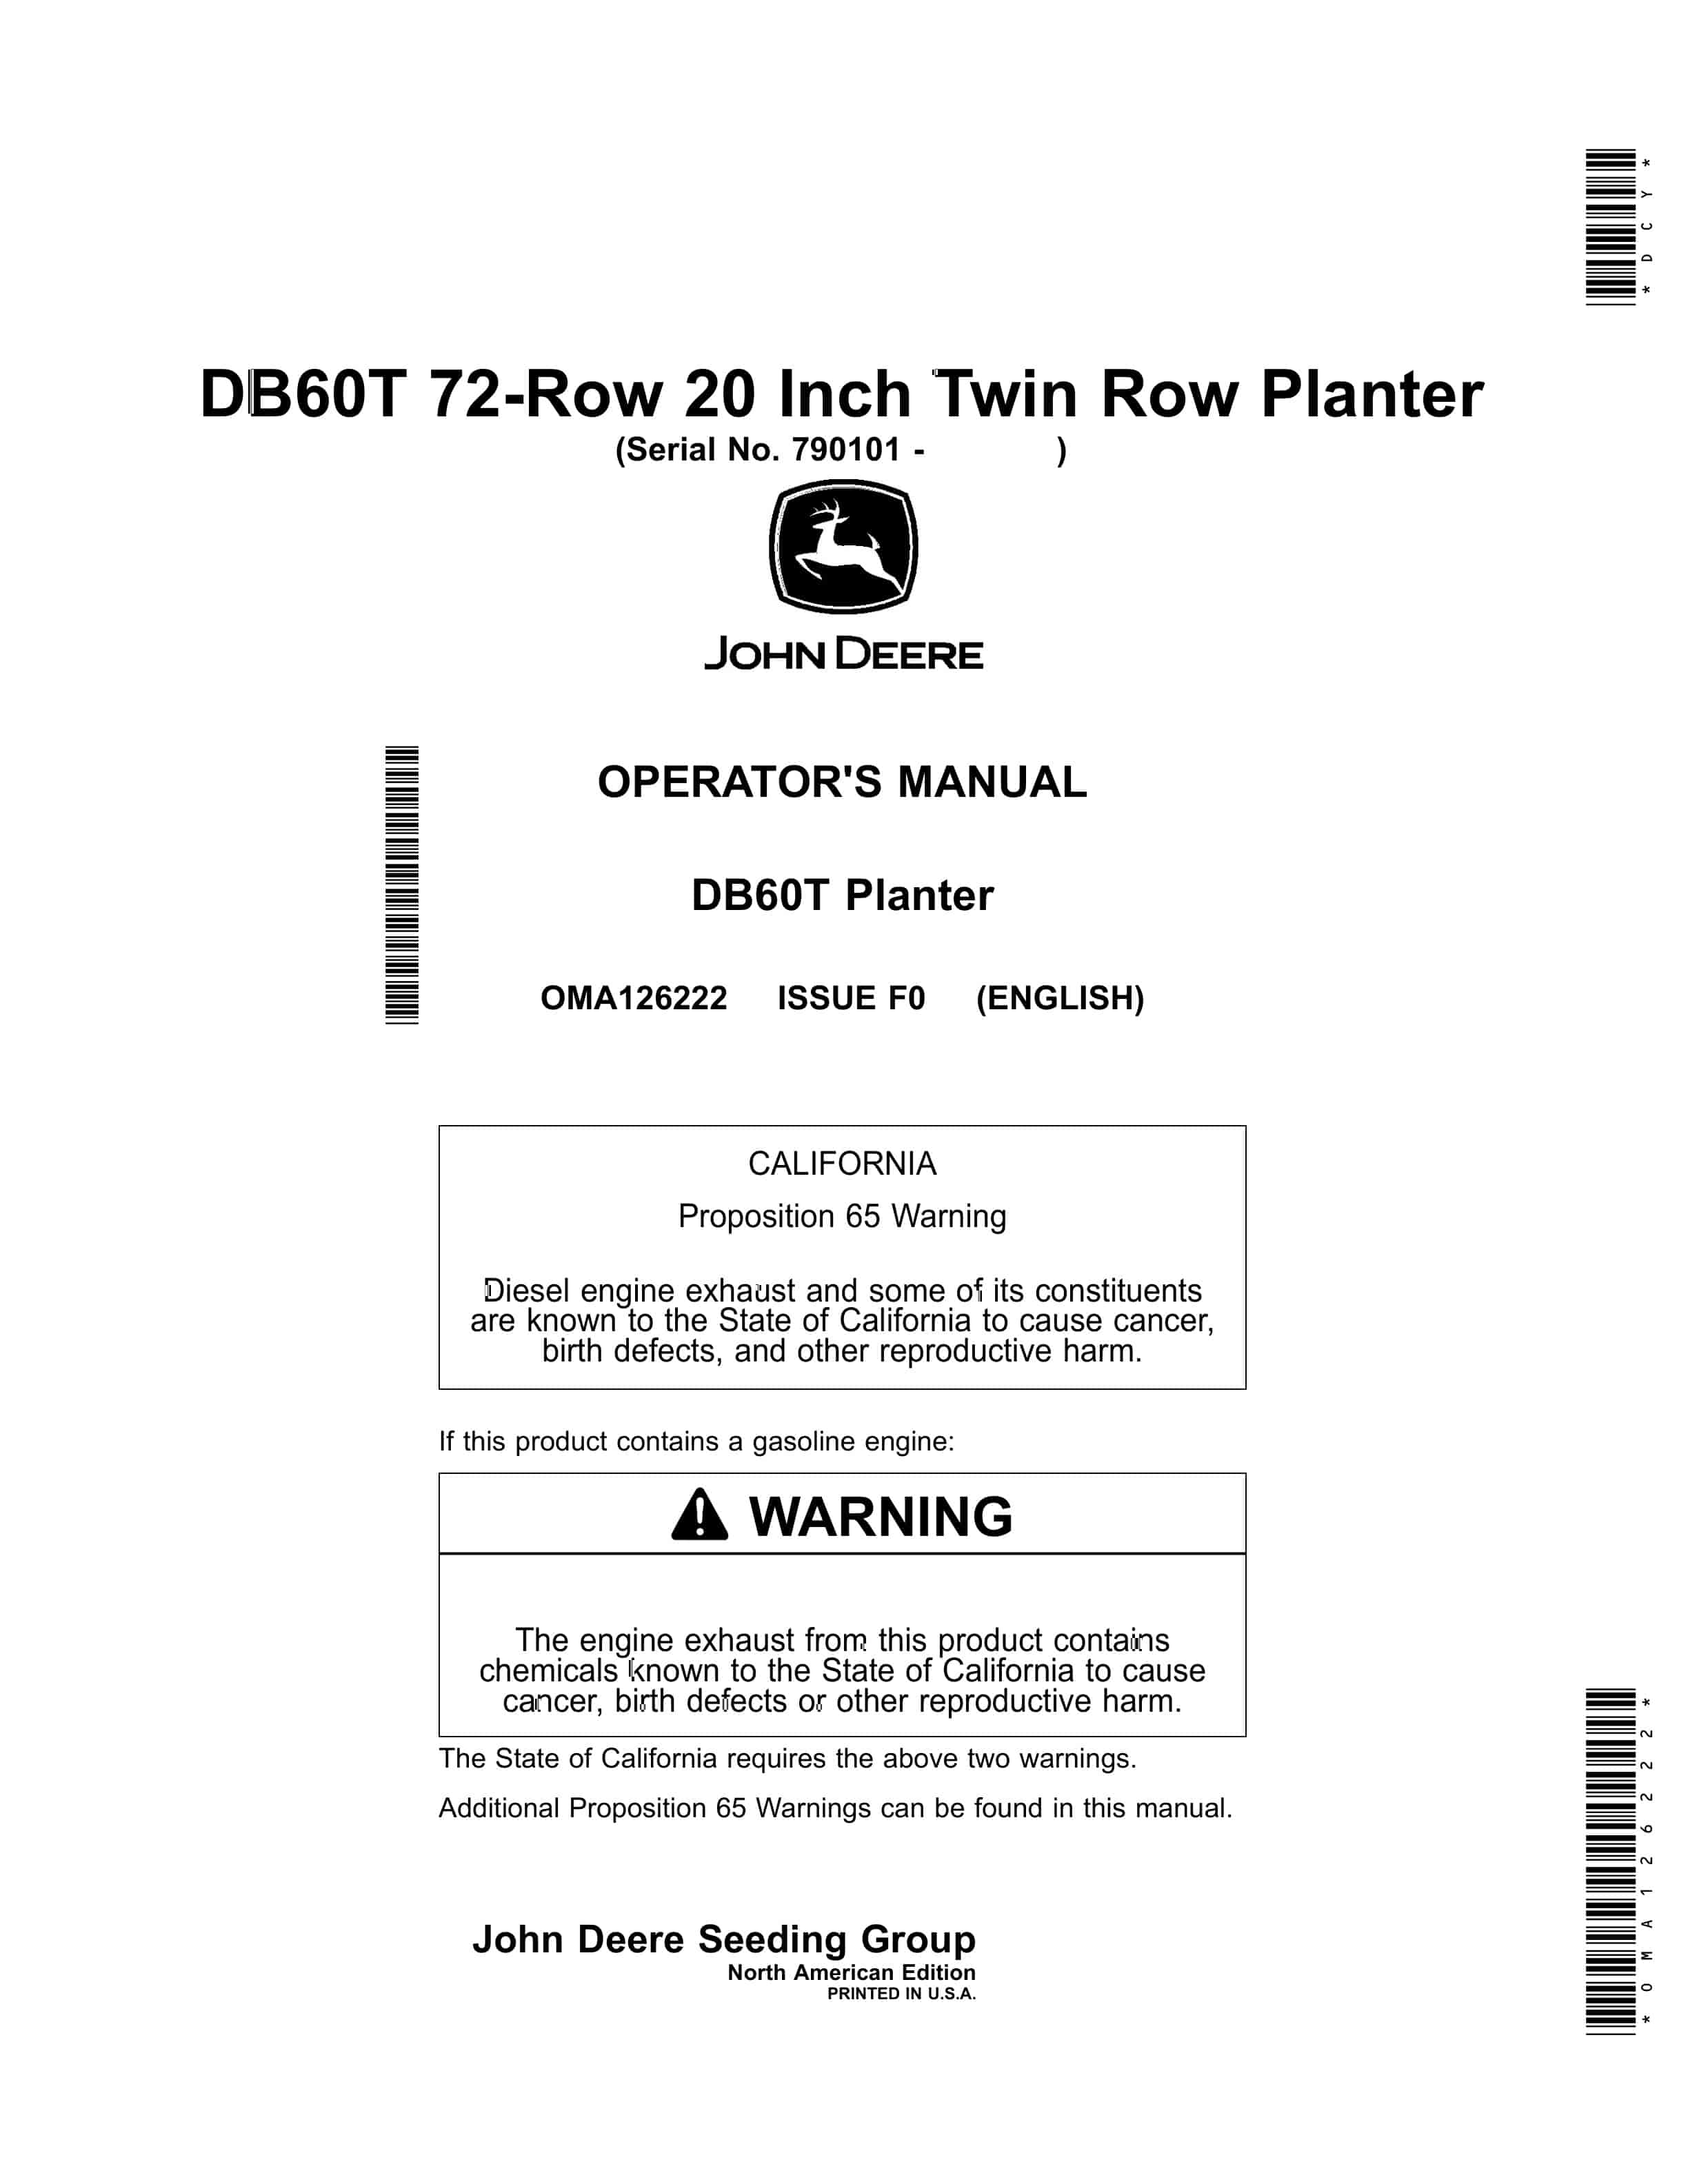 John Deere DB60T 72 Row 20 Inch Twin Row Planter Operator Manual OMA126222 1